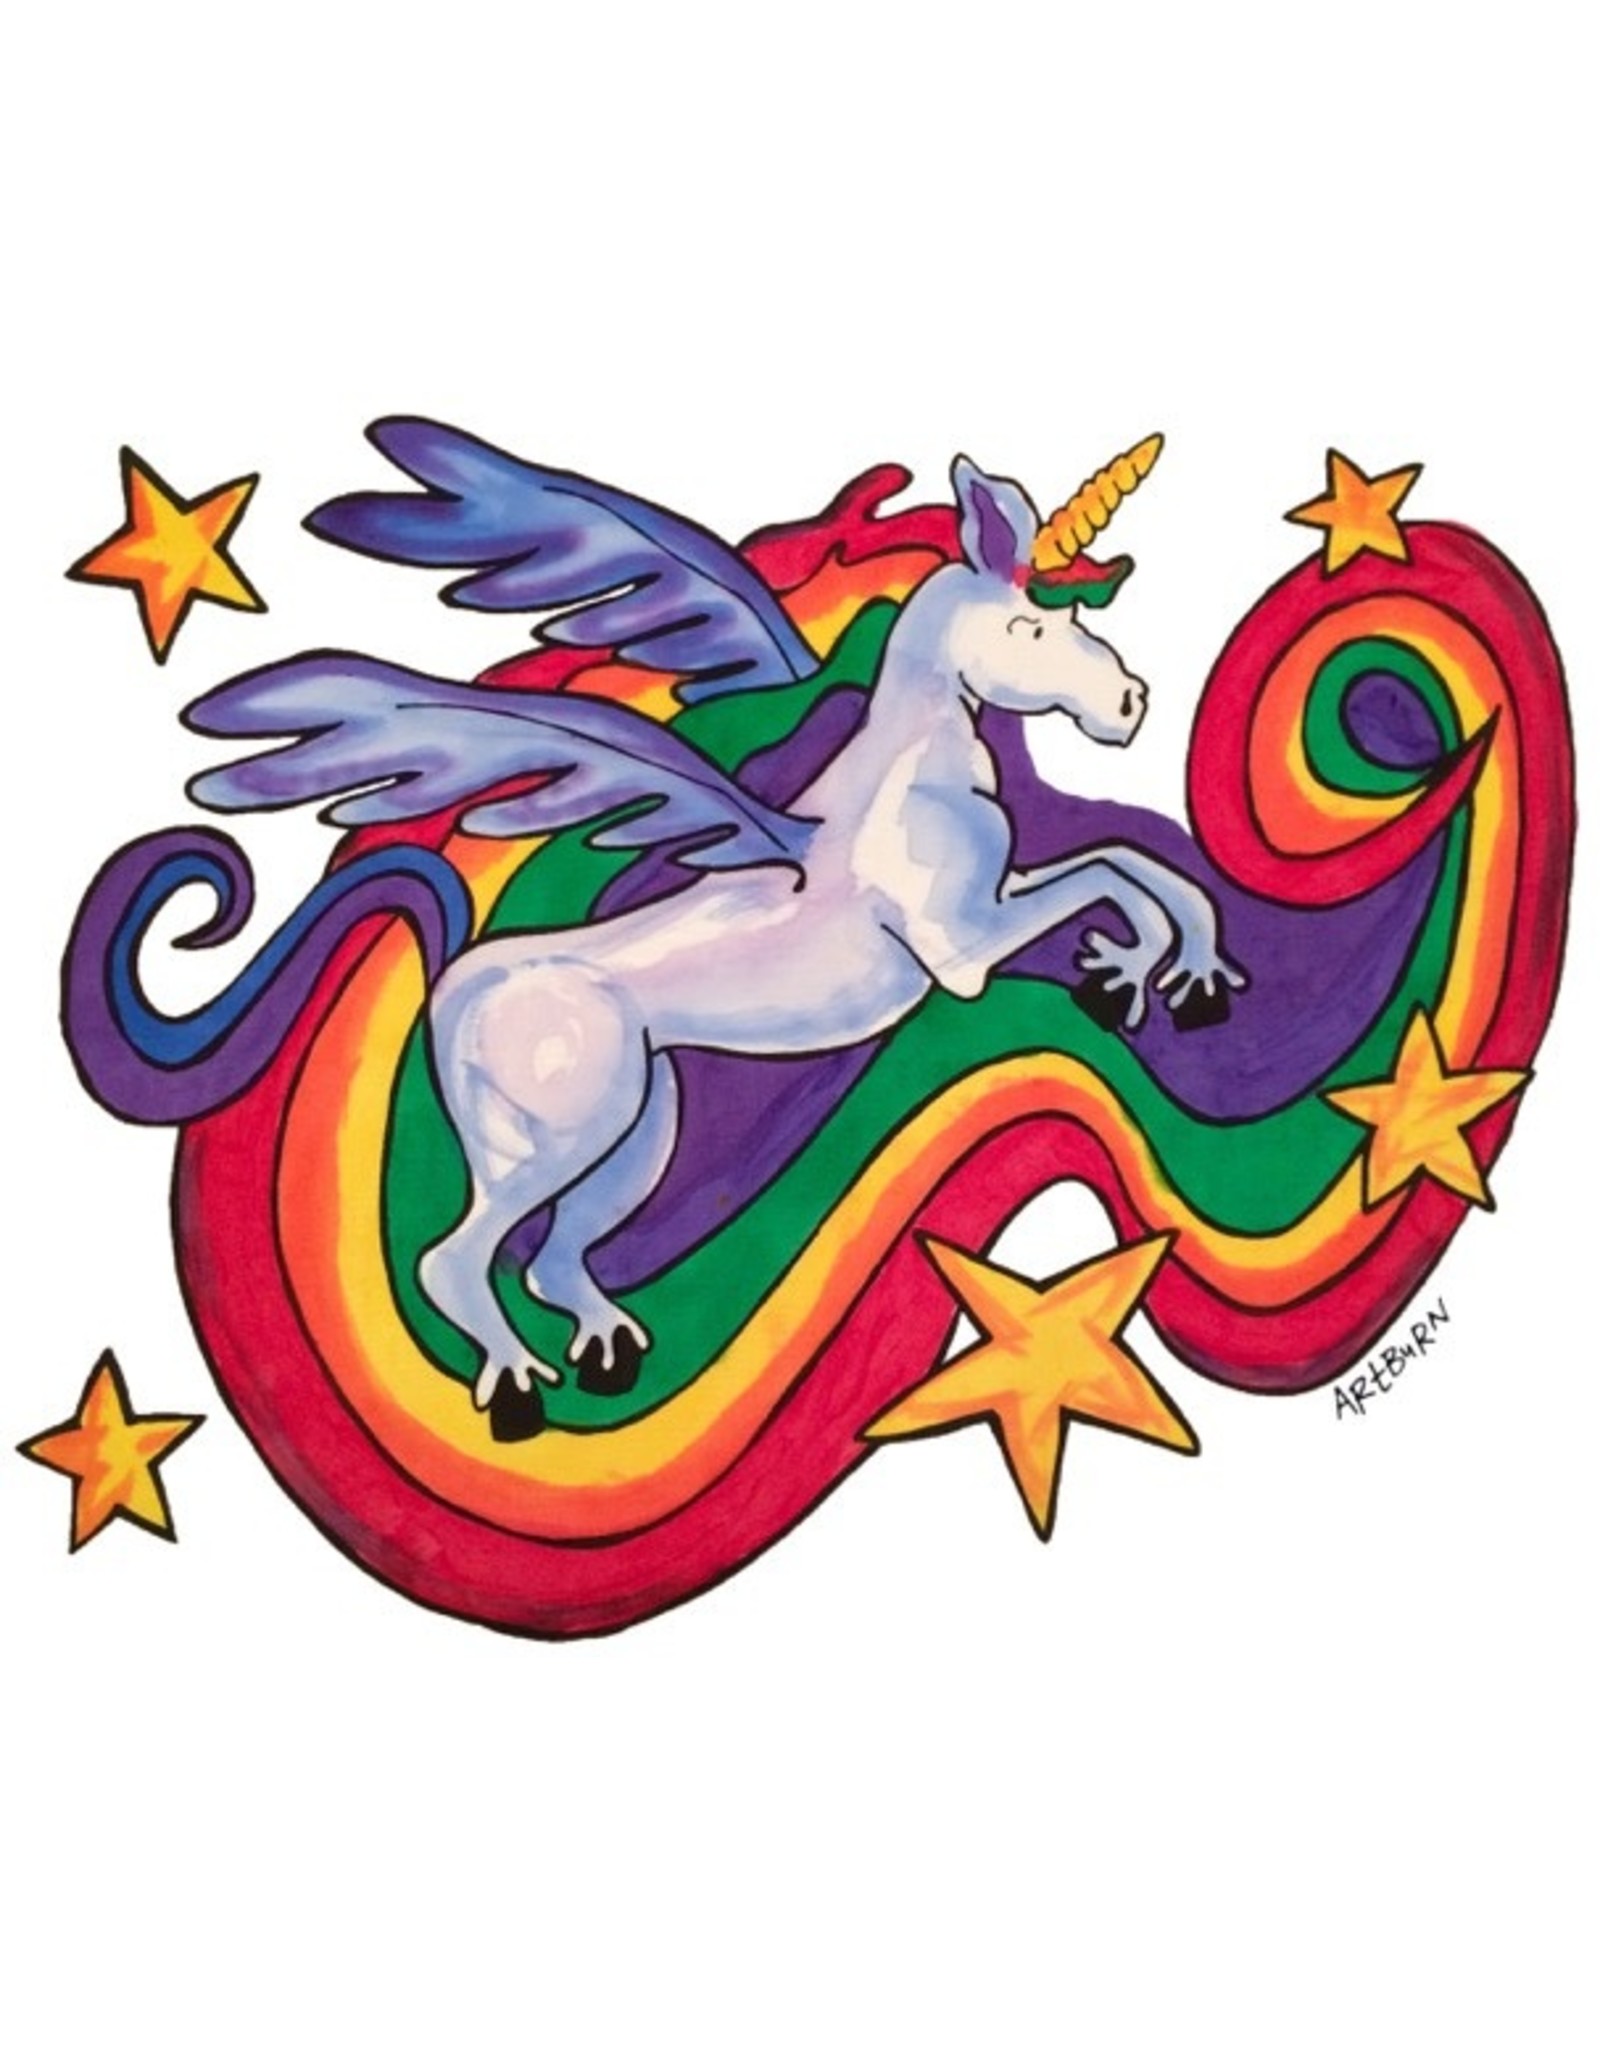 Artburn Pillowcase Painting Kit - Rainbow Unicorn